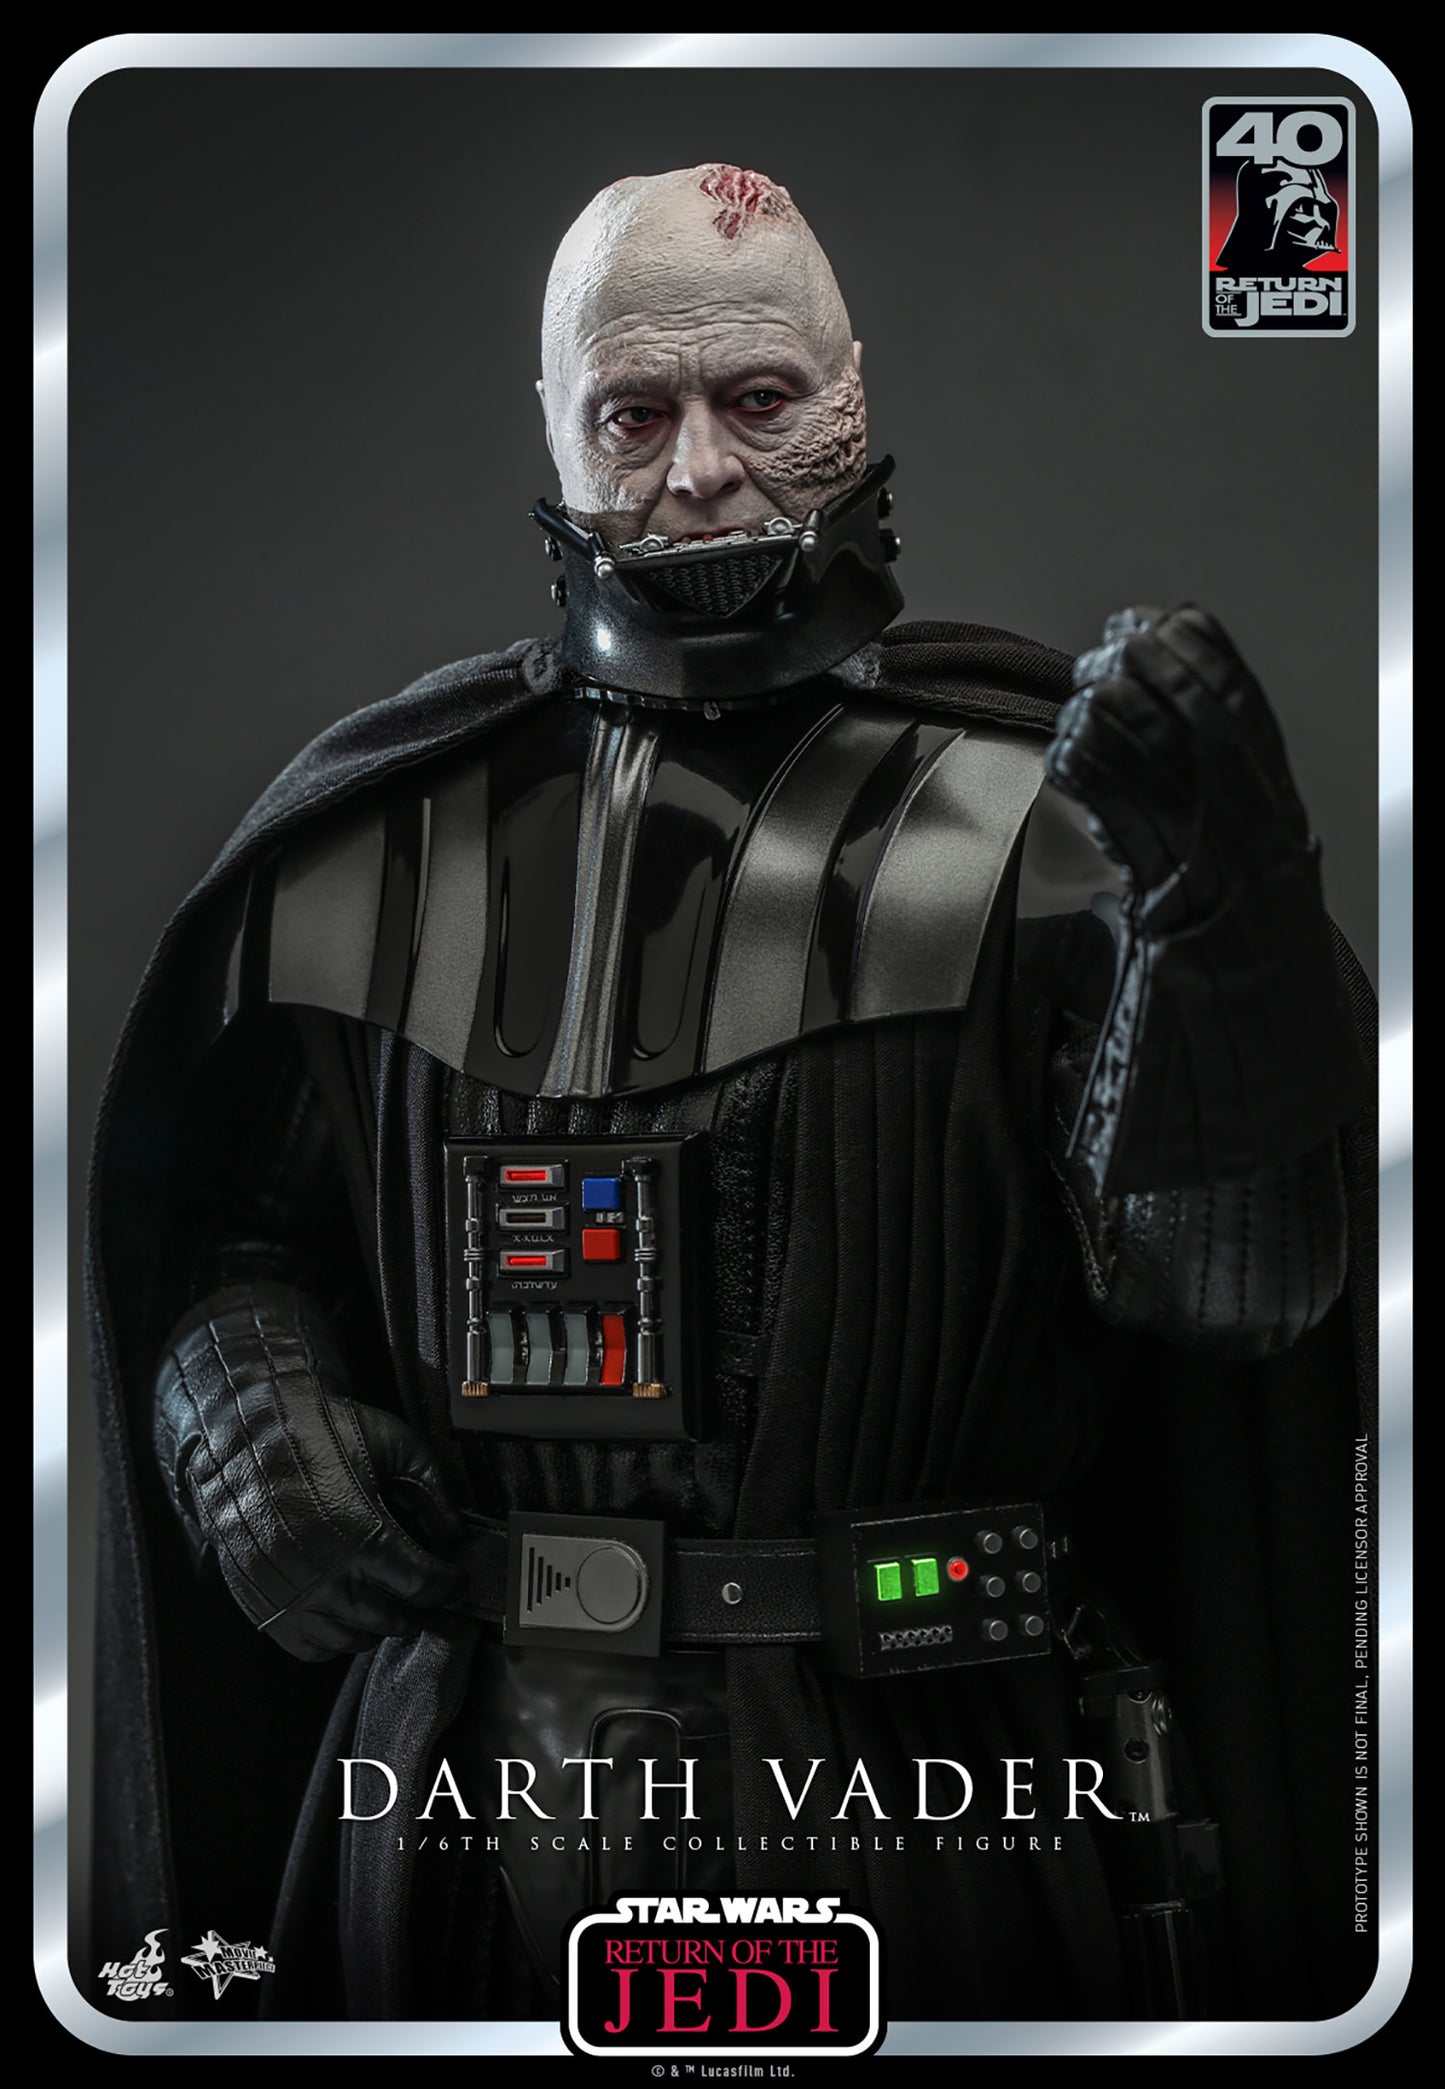 Darth Vader (Return of the Jedi 40th Anniversary Collection) 1/6 Scale Figure